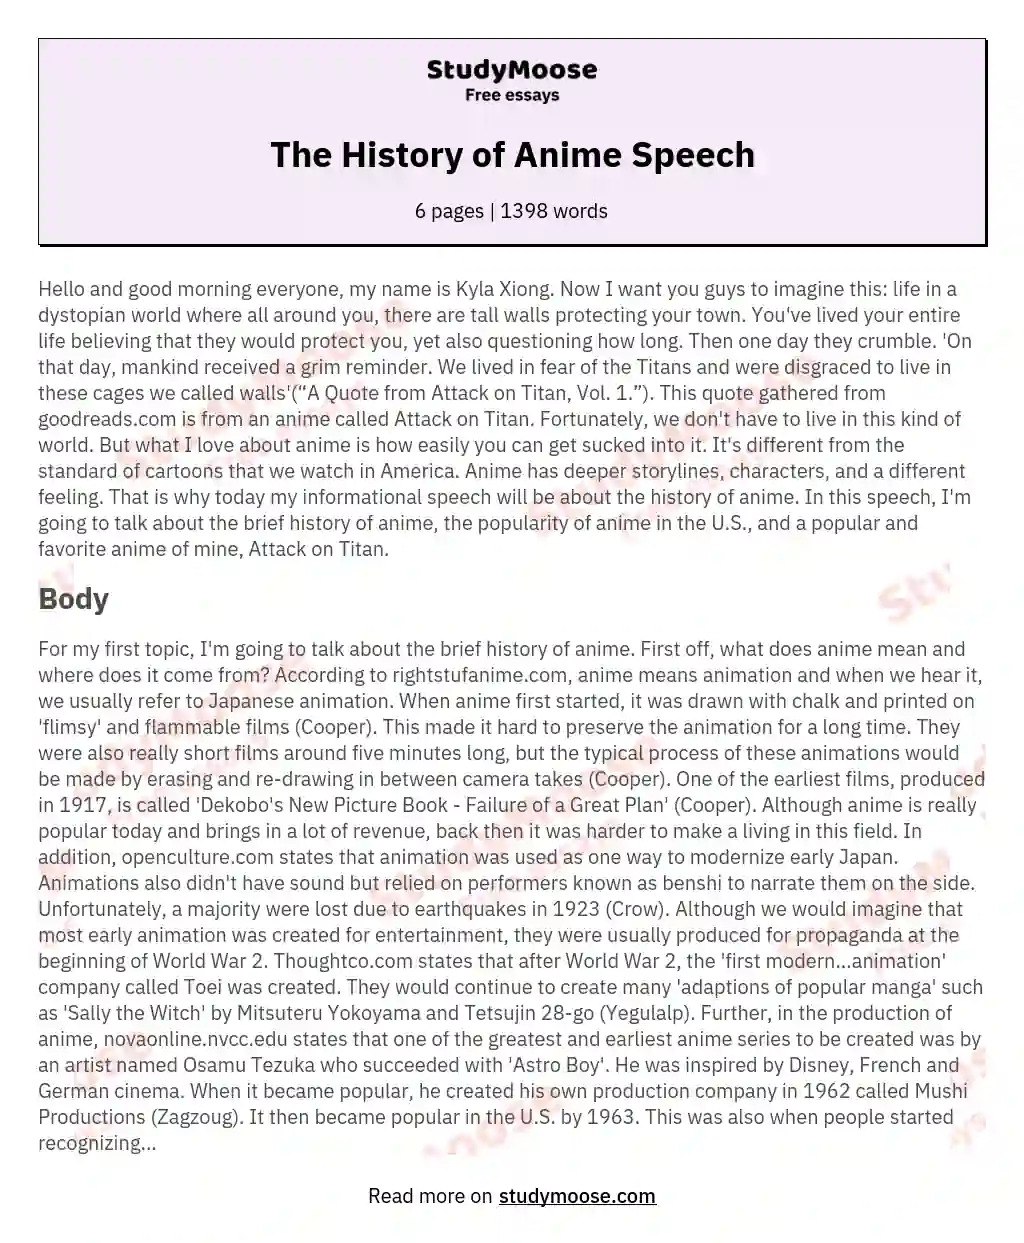 The History of Anime Speech